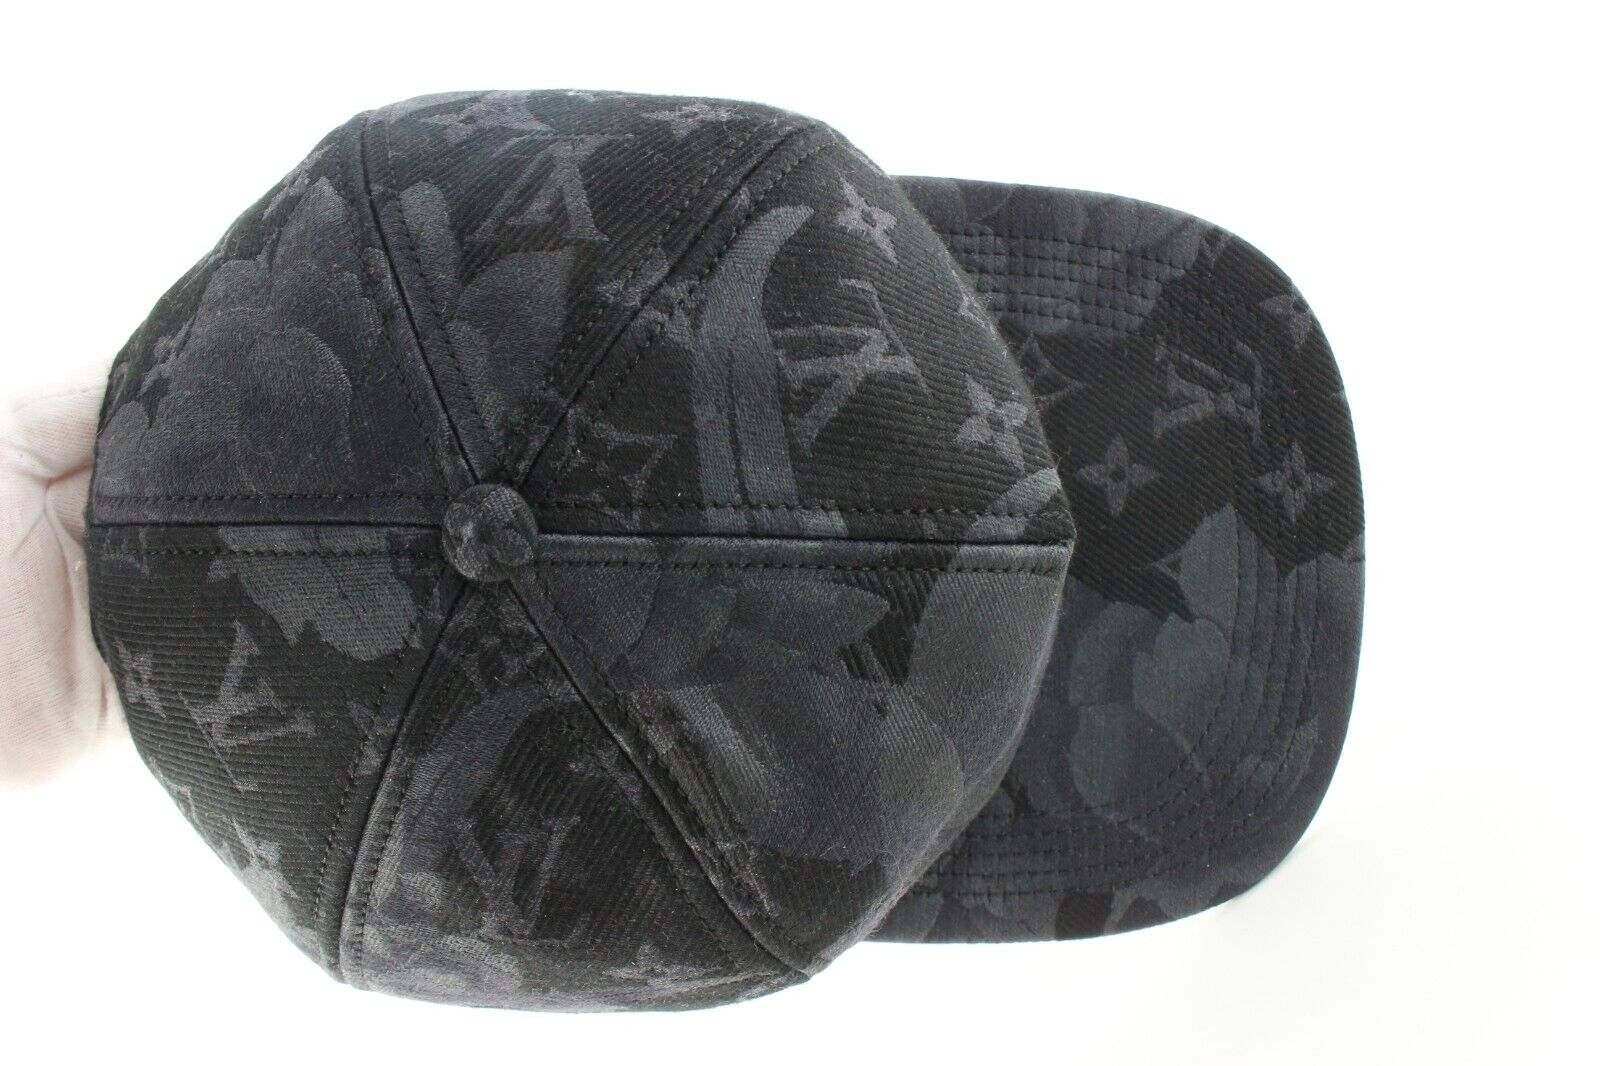 Louis Vuitton Black Grey Monogram Flowers Baseball Cap Hat 6LK0427